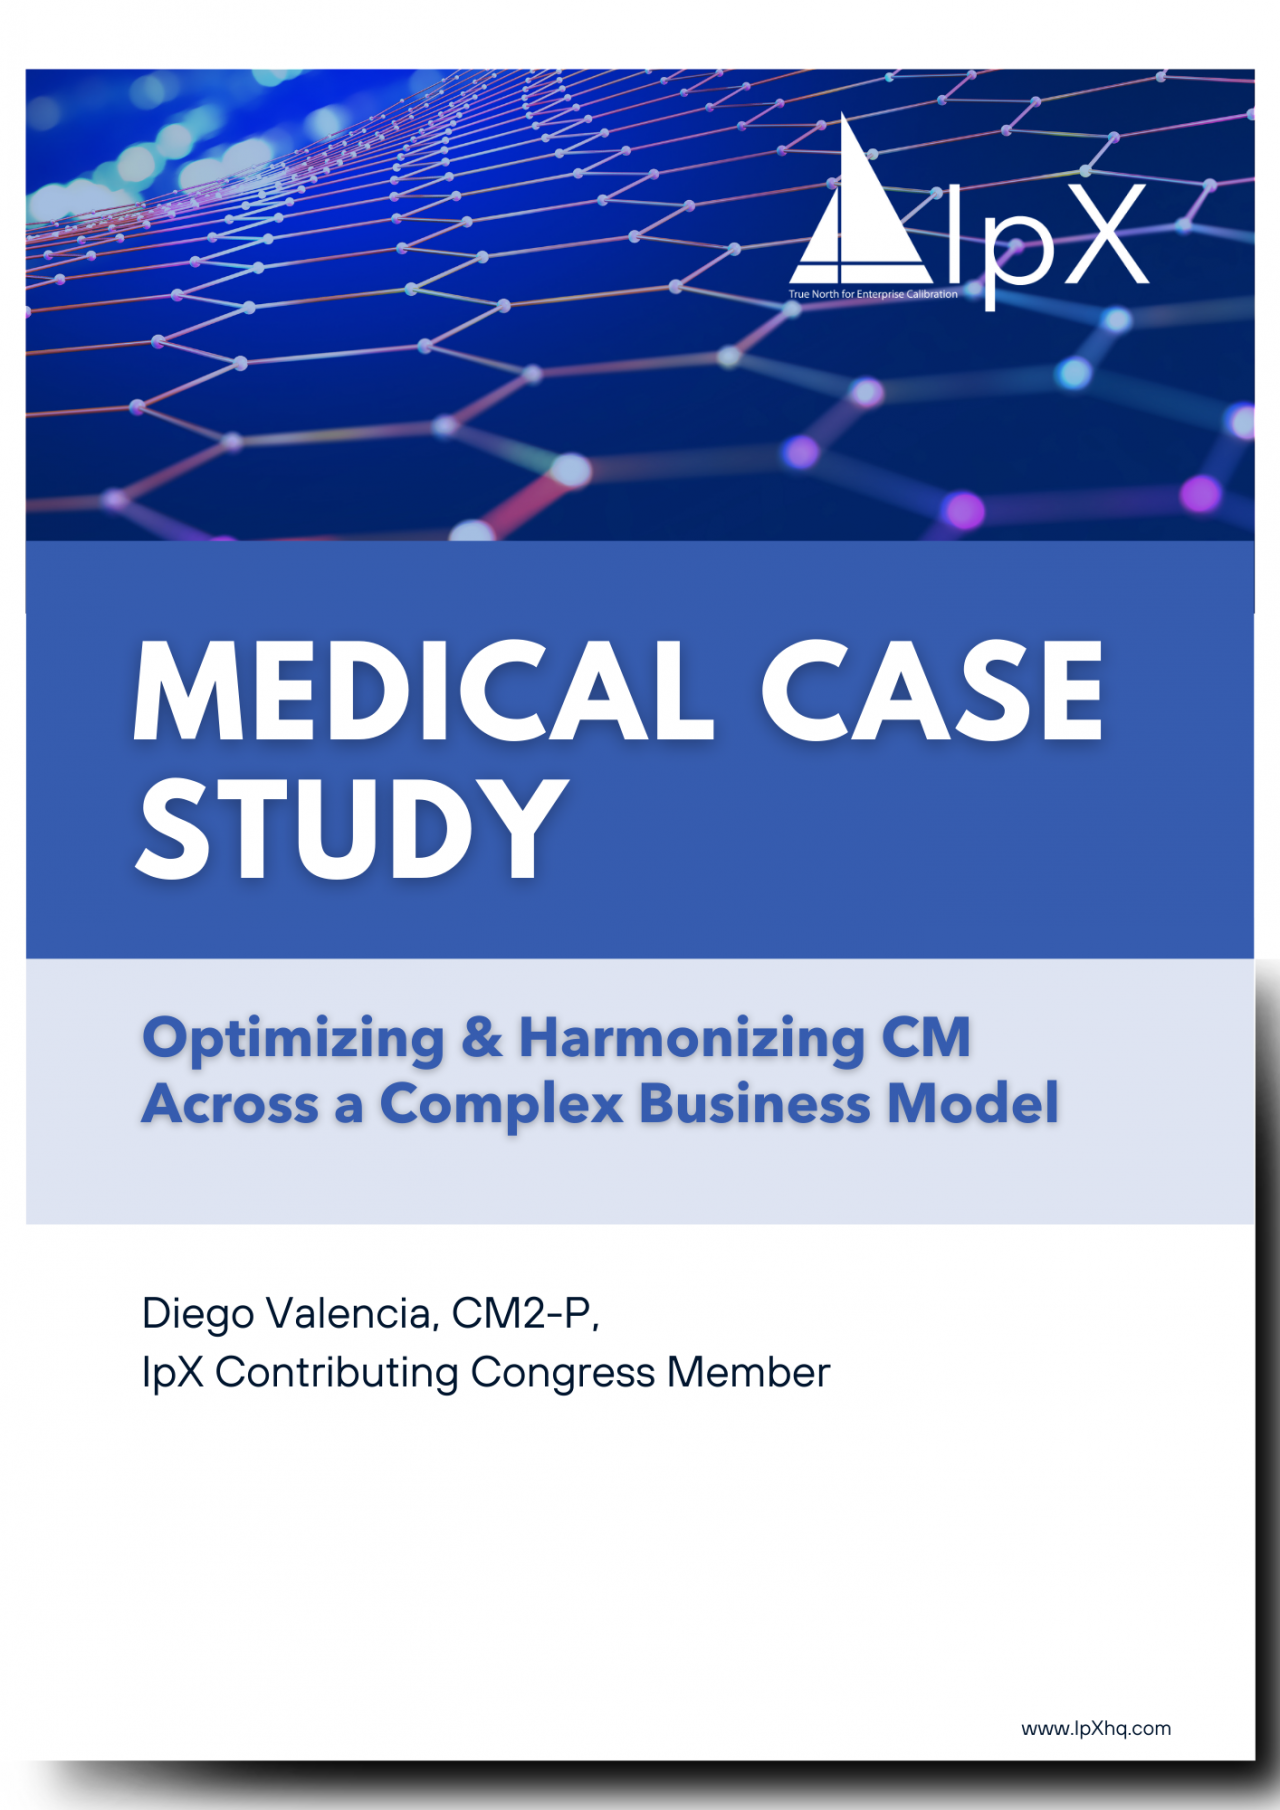 Medical Case Study: Diego Valencia, CM2-P